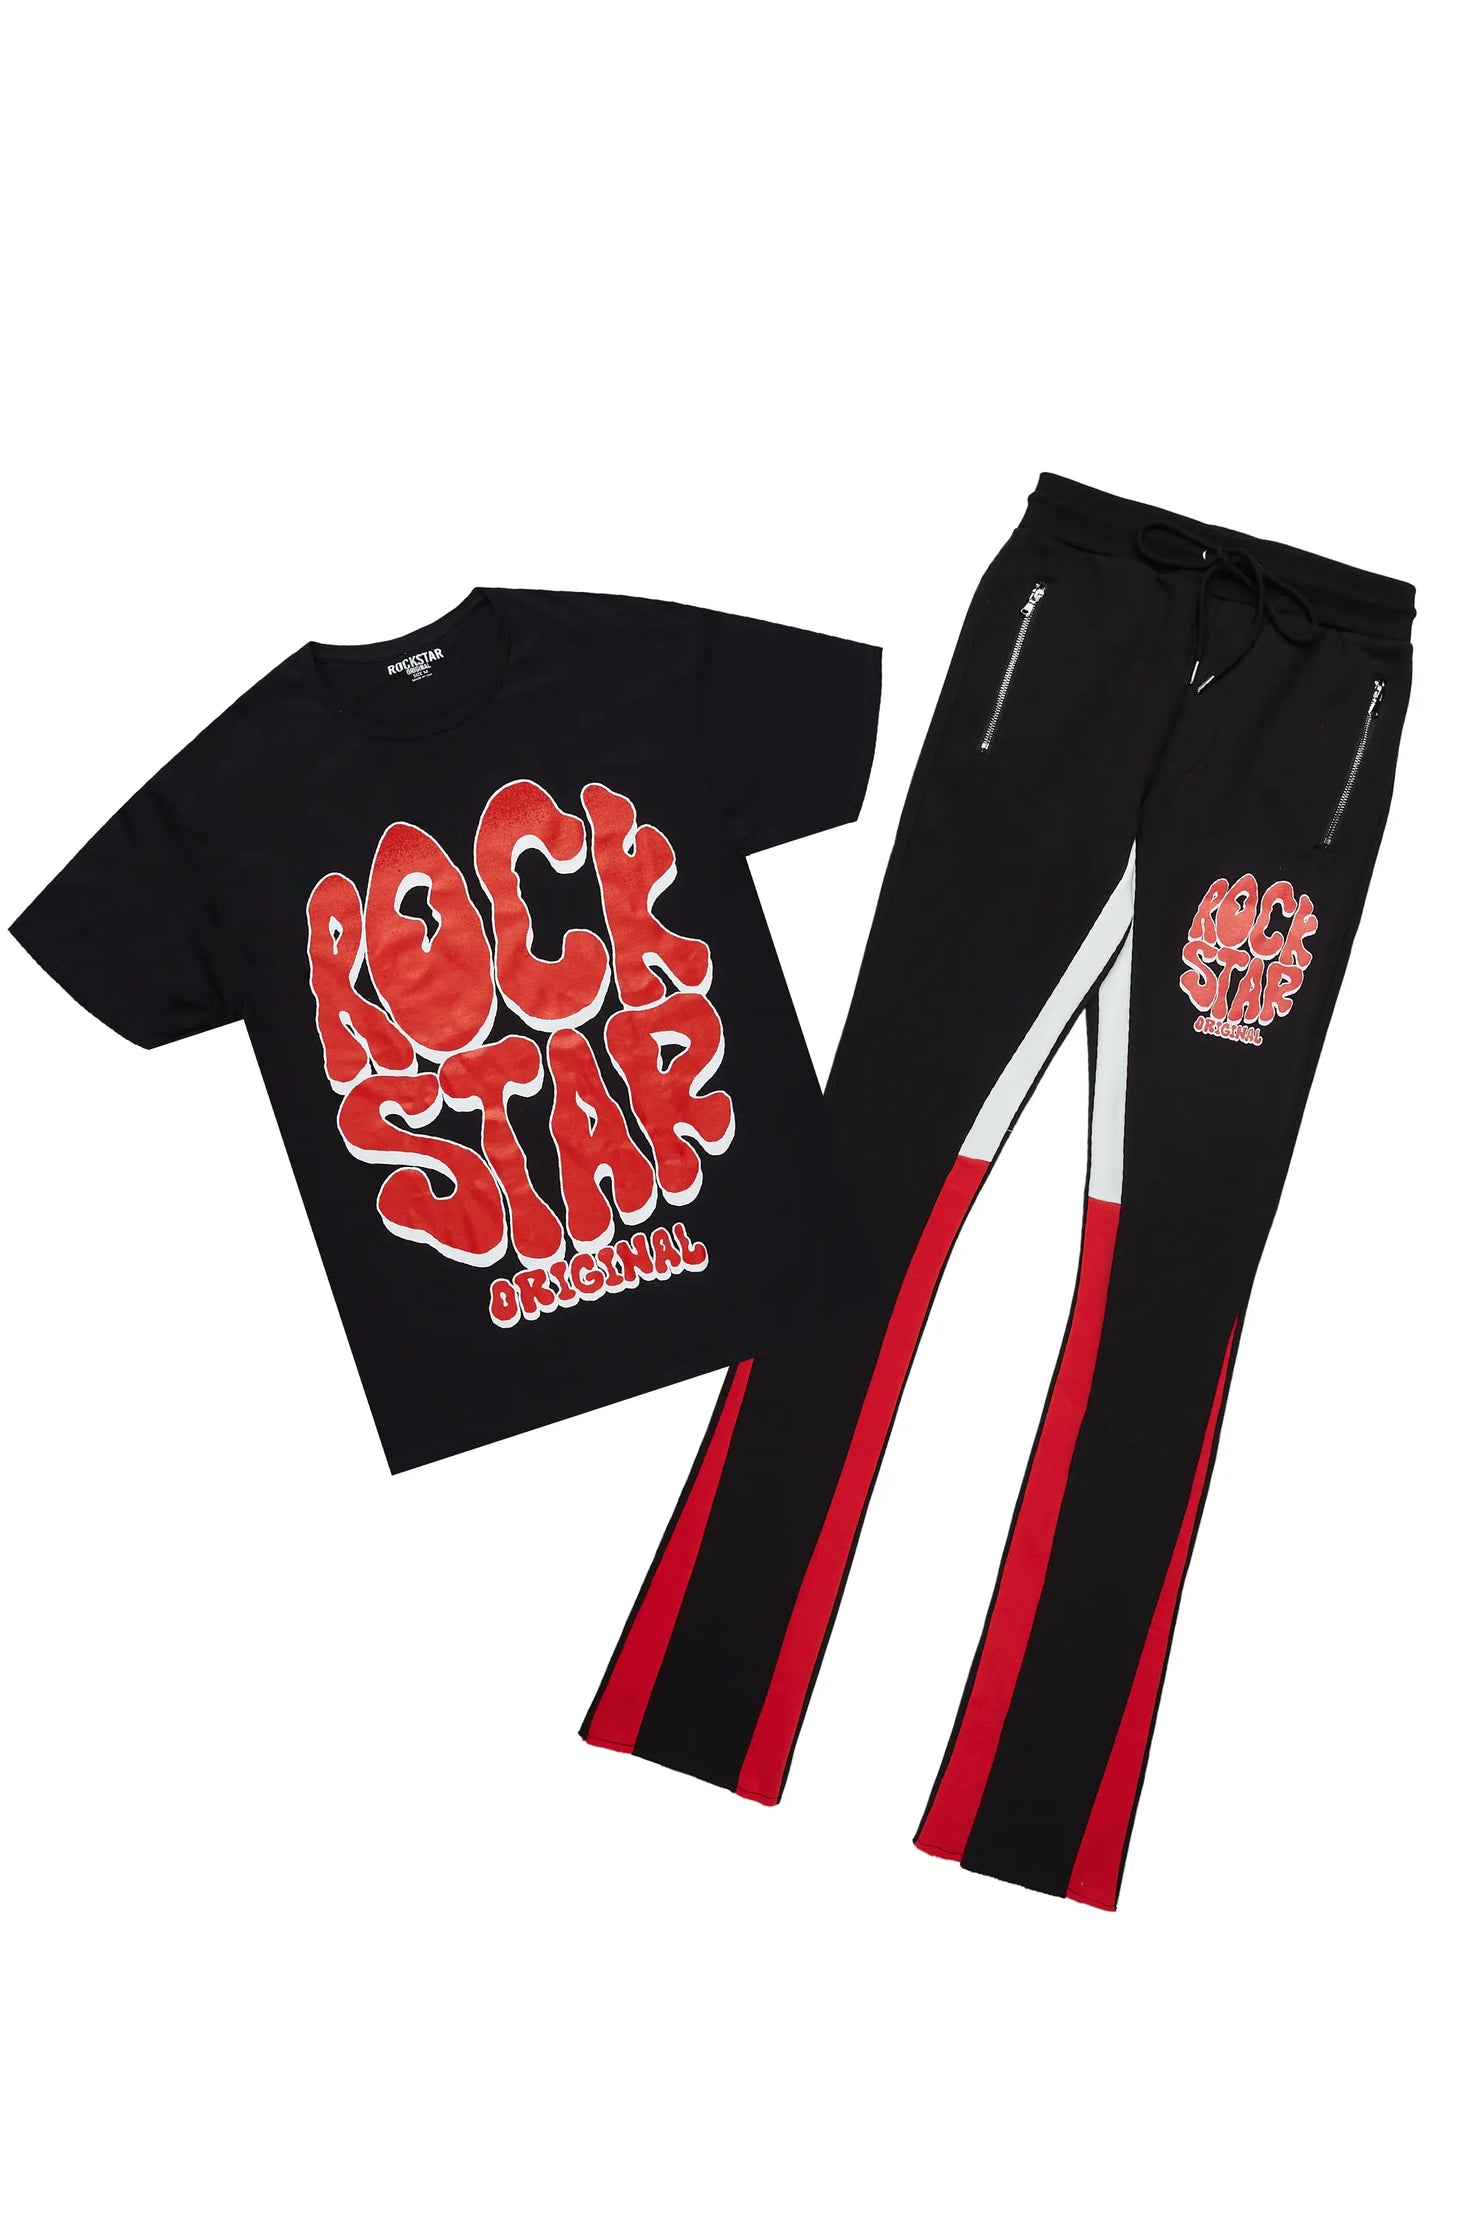 Warblen Black/Red T-Shirt/Stacked Flare Pant Set